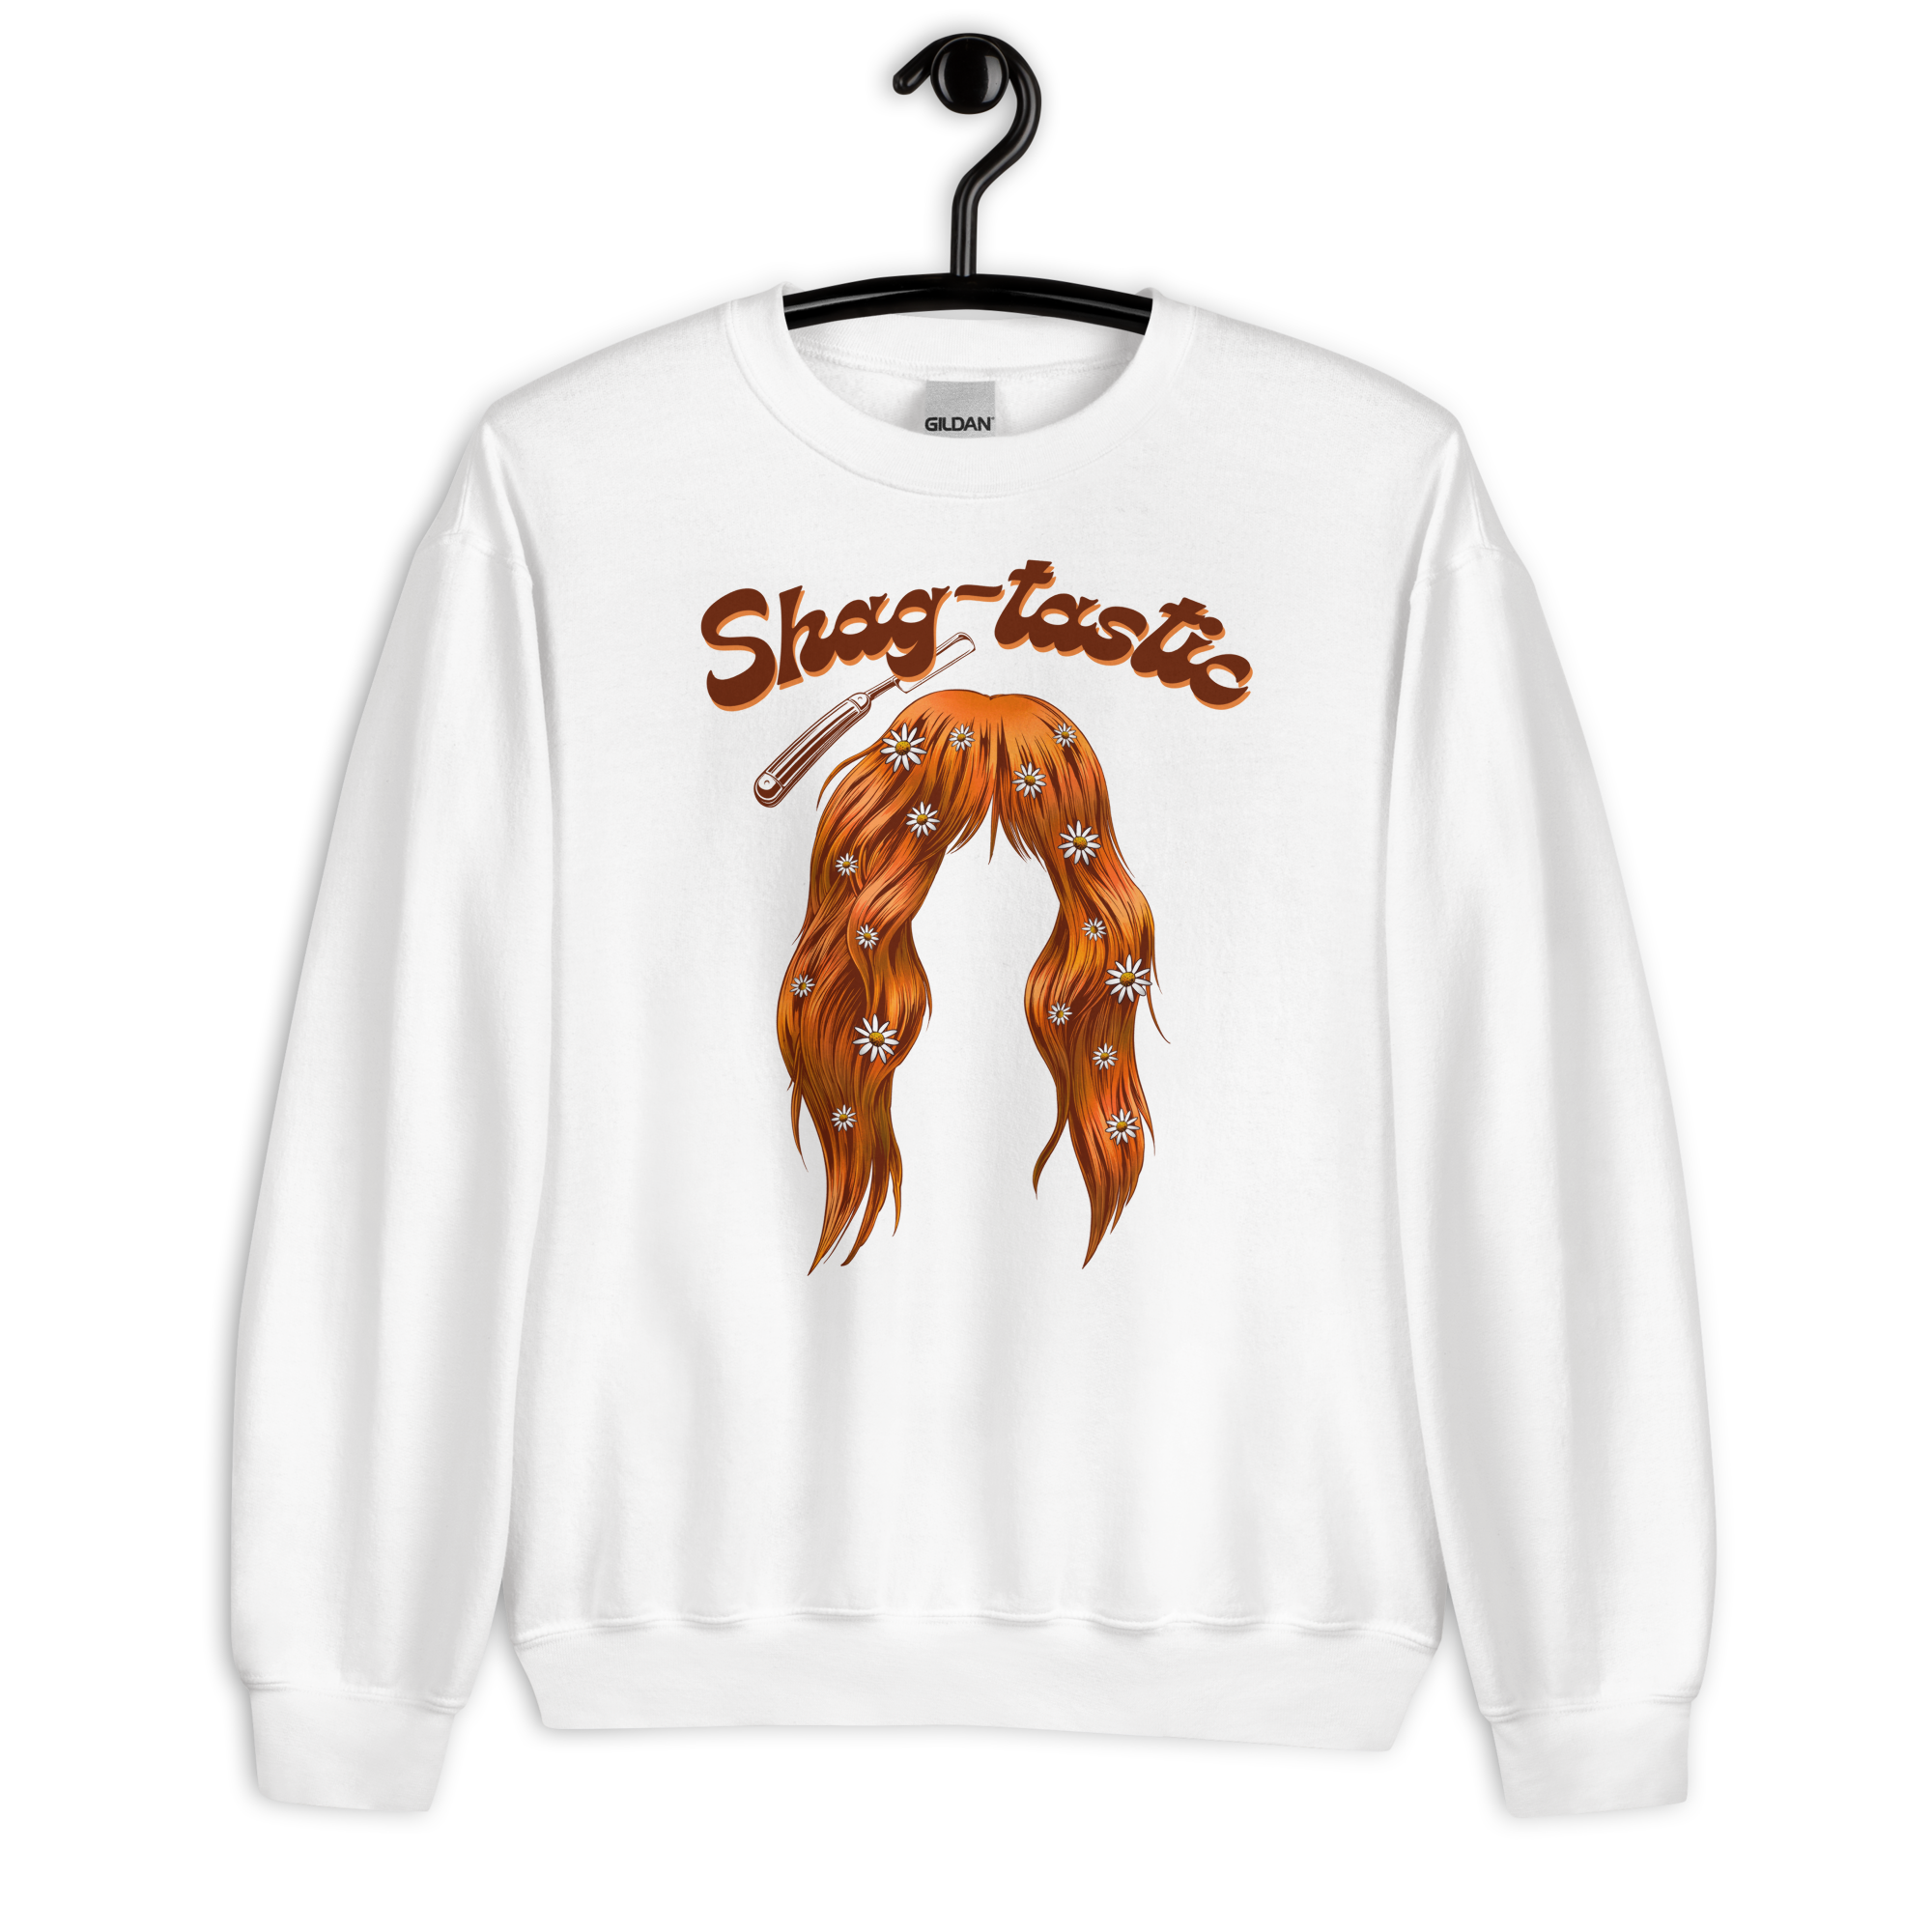 Shag-tastic Crewneck Sweatshirt